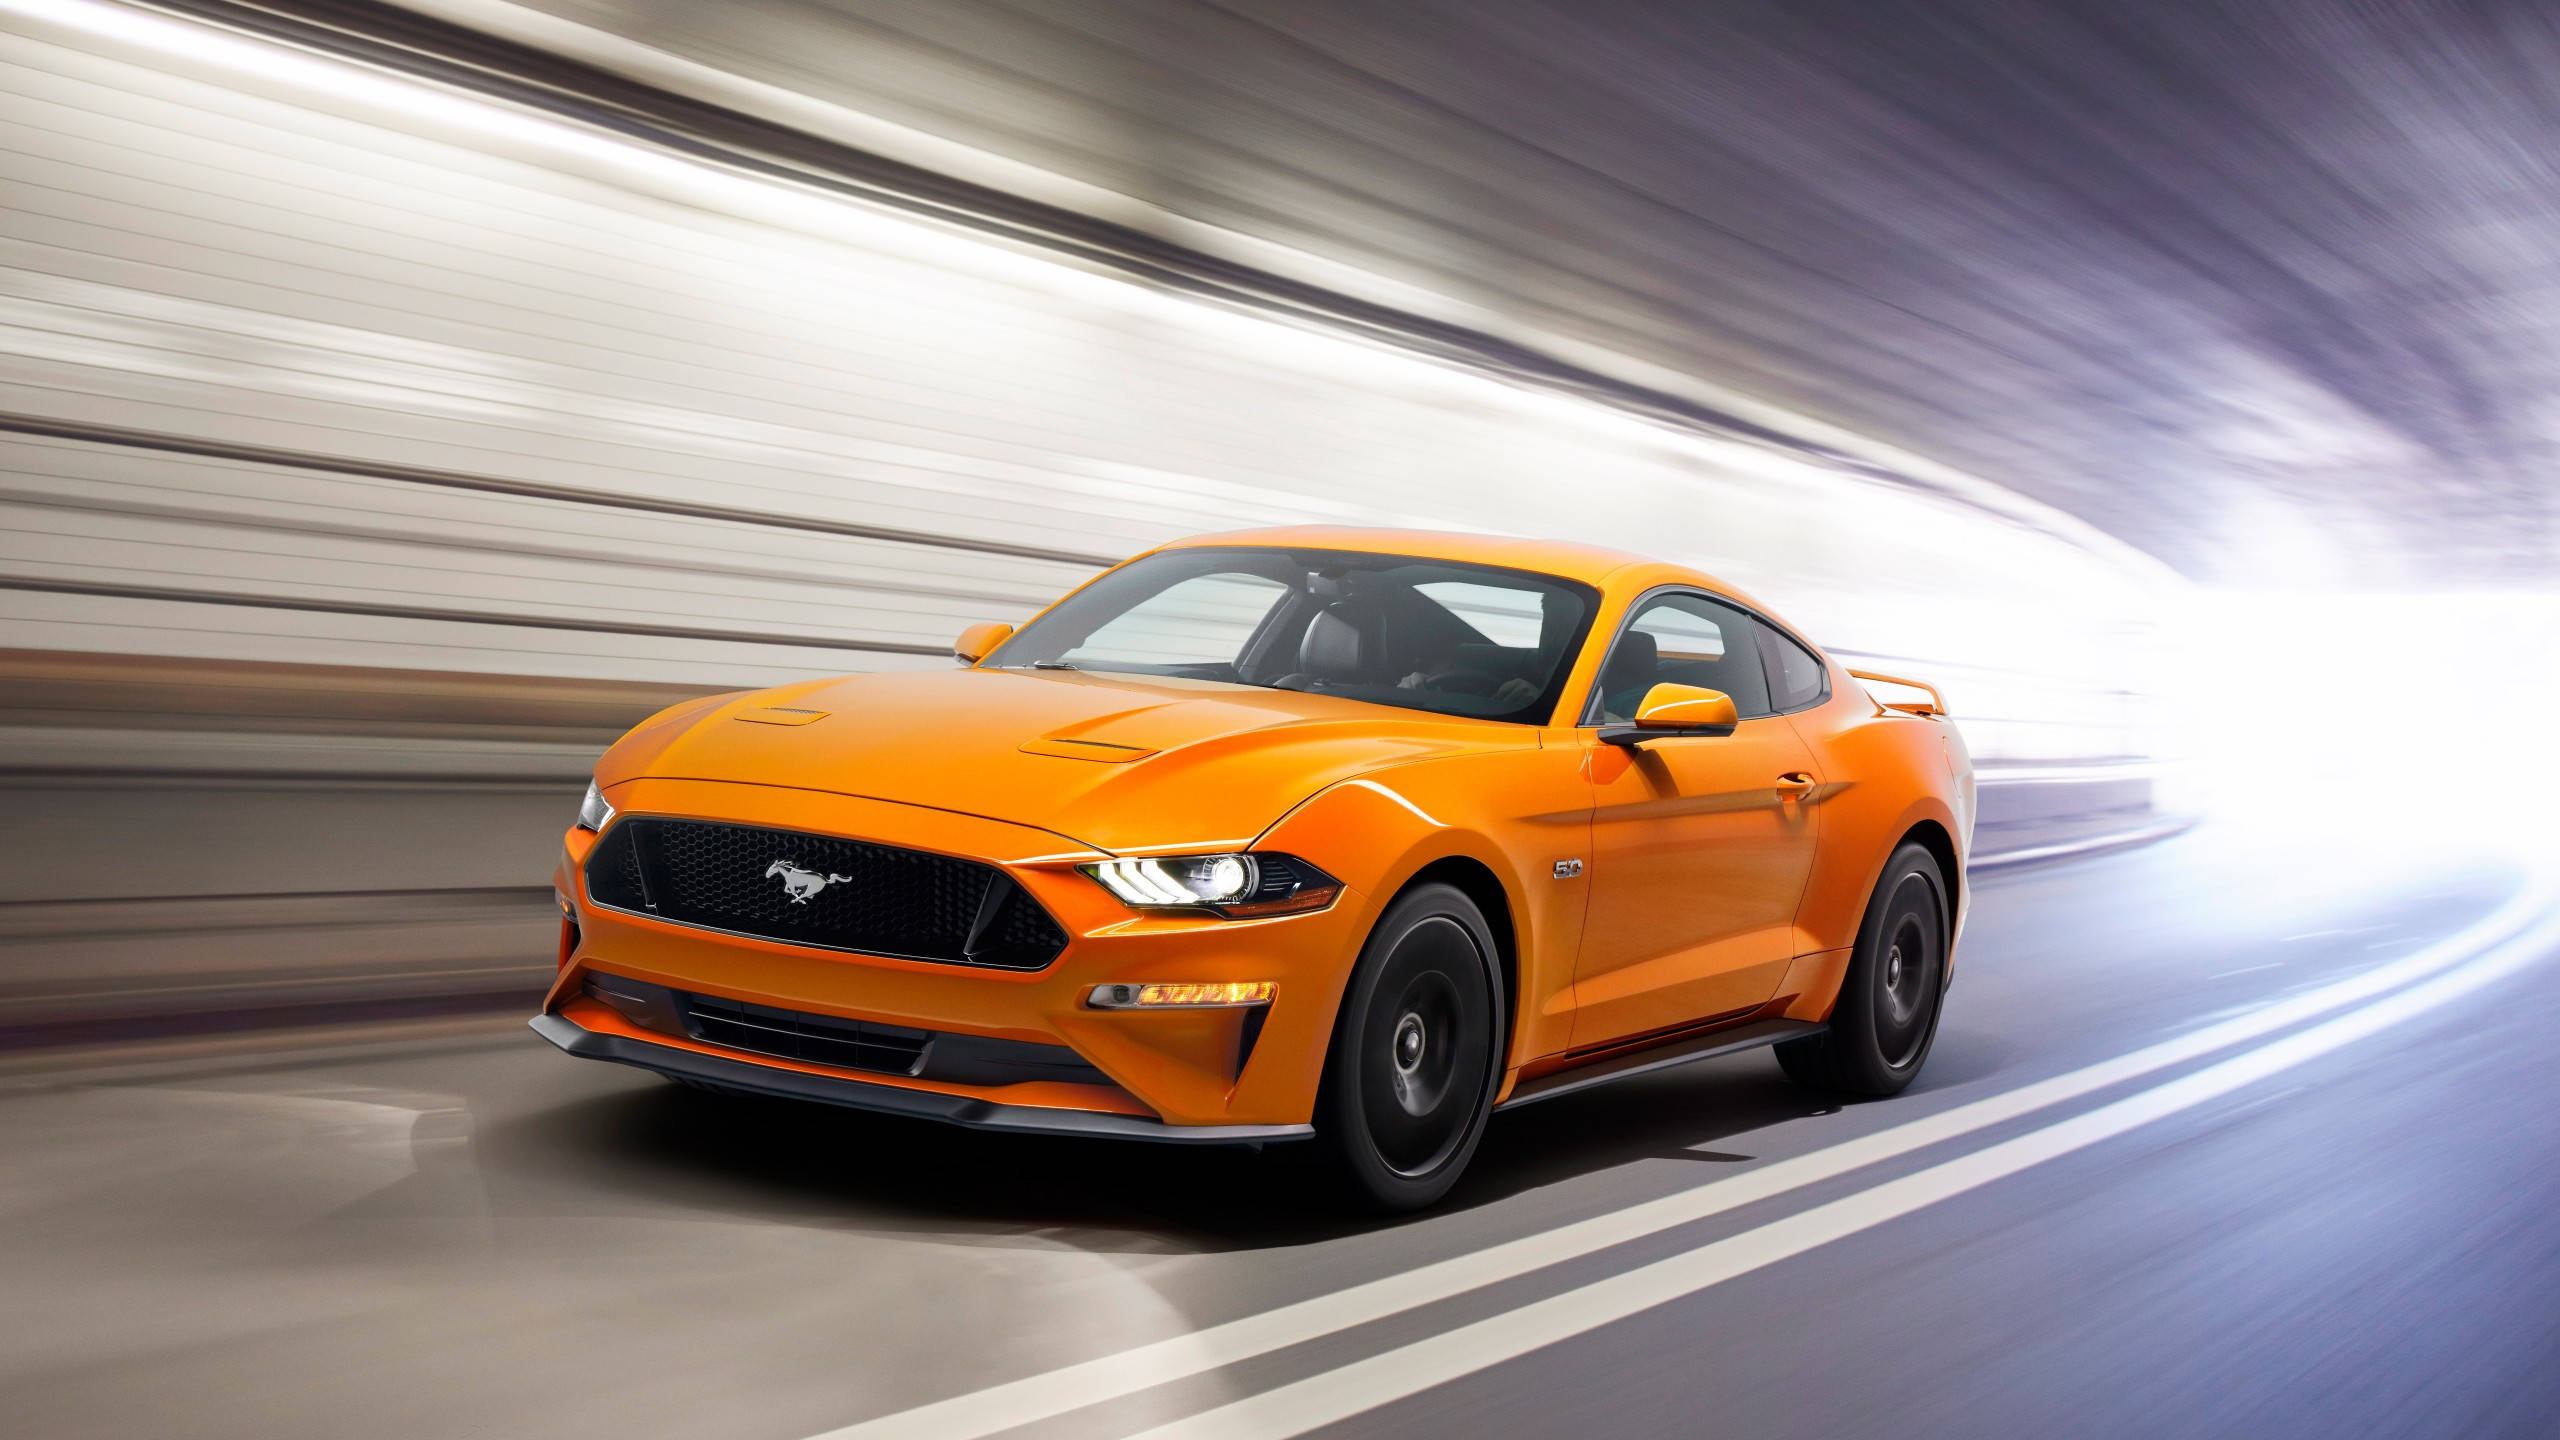 2560x1440papel De Parede Do Carro Amarelo Ford Mustang 2019. Papel de Parede